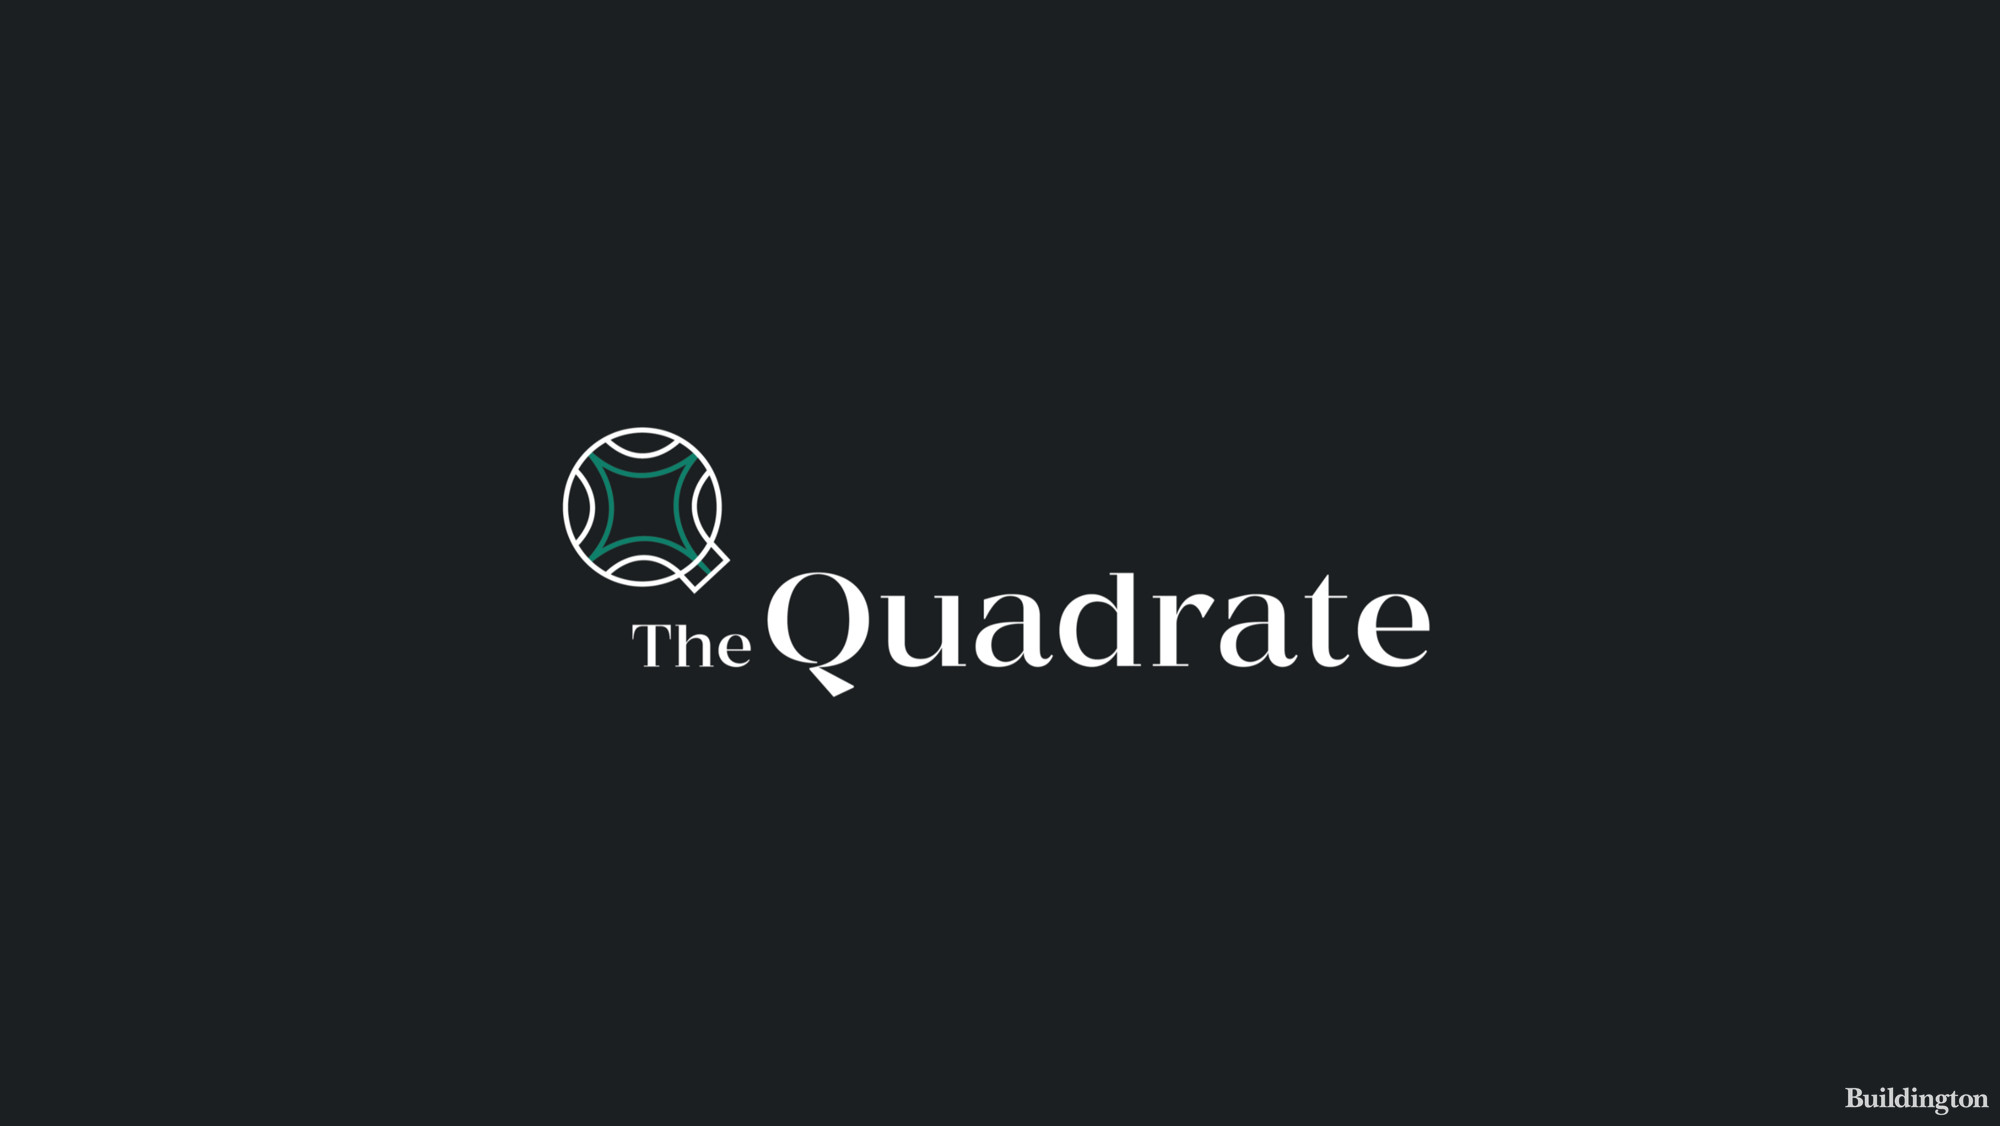 The Quadrate development logo